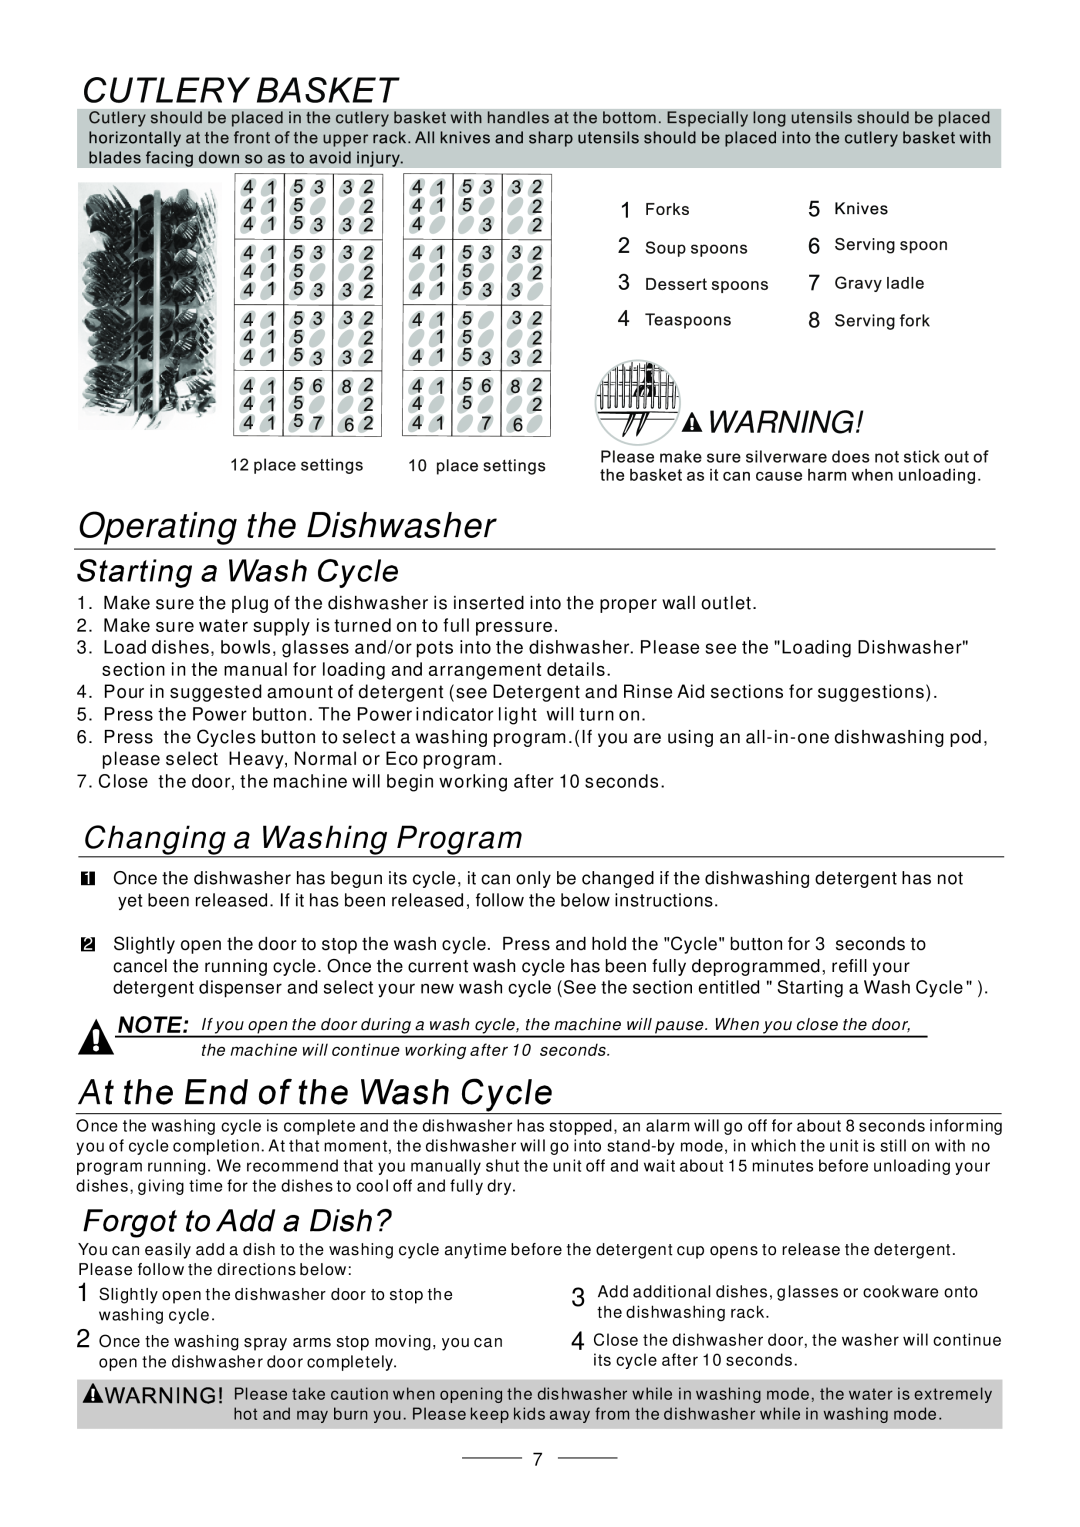 Fagor America LFA-75IT manual Operating the Dishwasher, Changing a Washing Program 